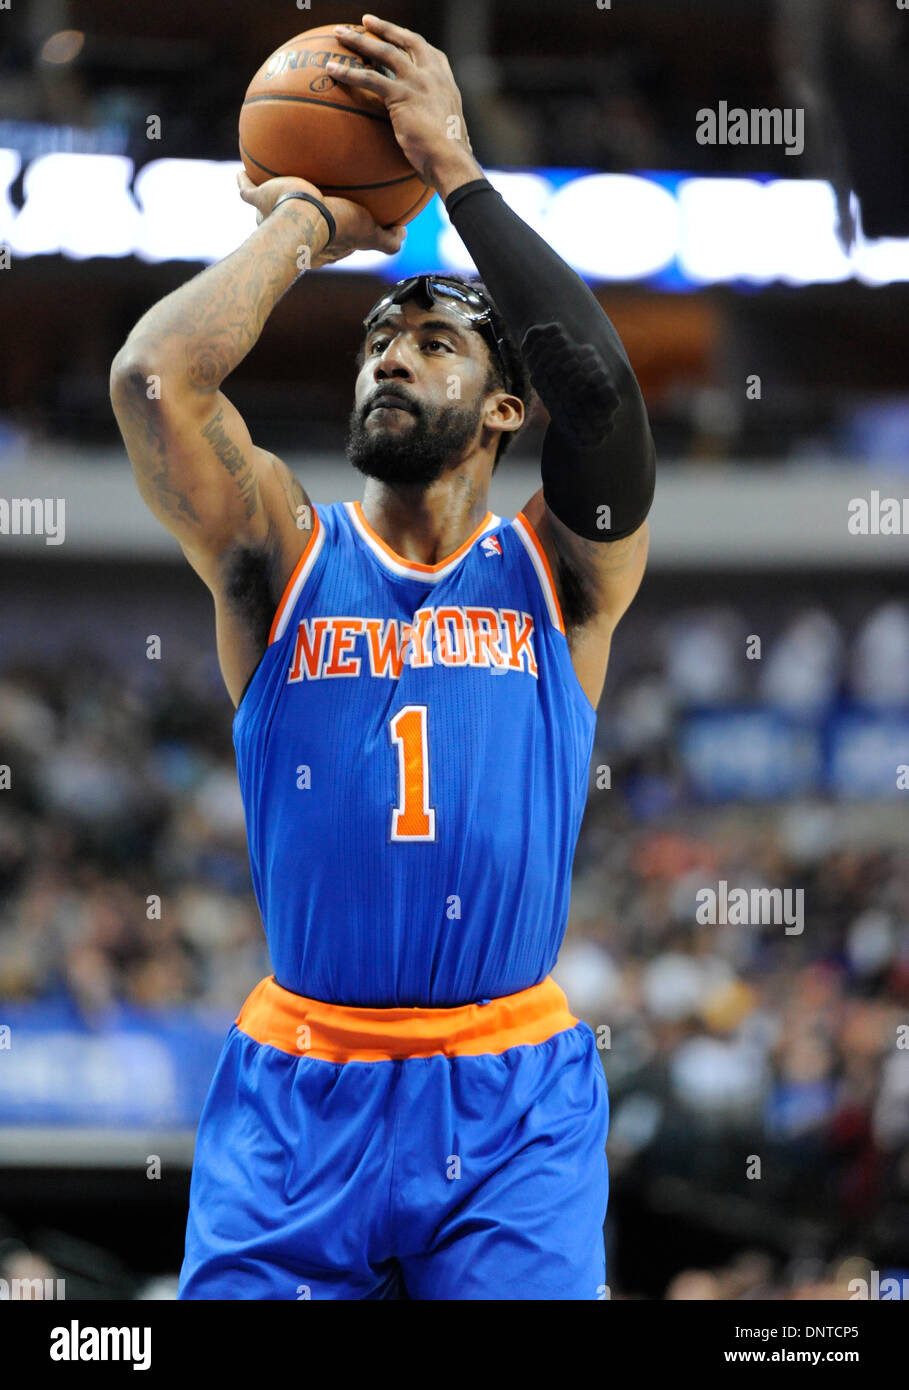 New York Knicks Power Forward Stock Photos & New York Knicks Power ...